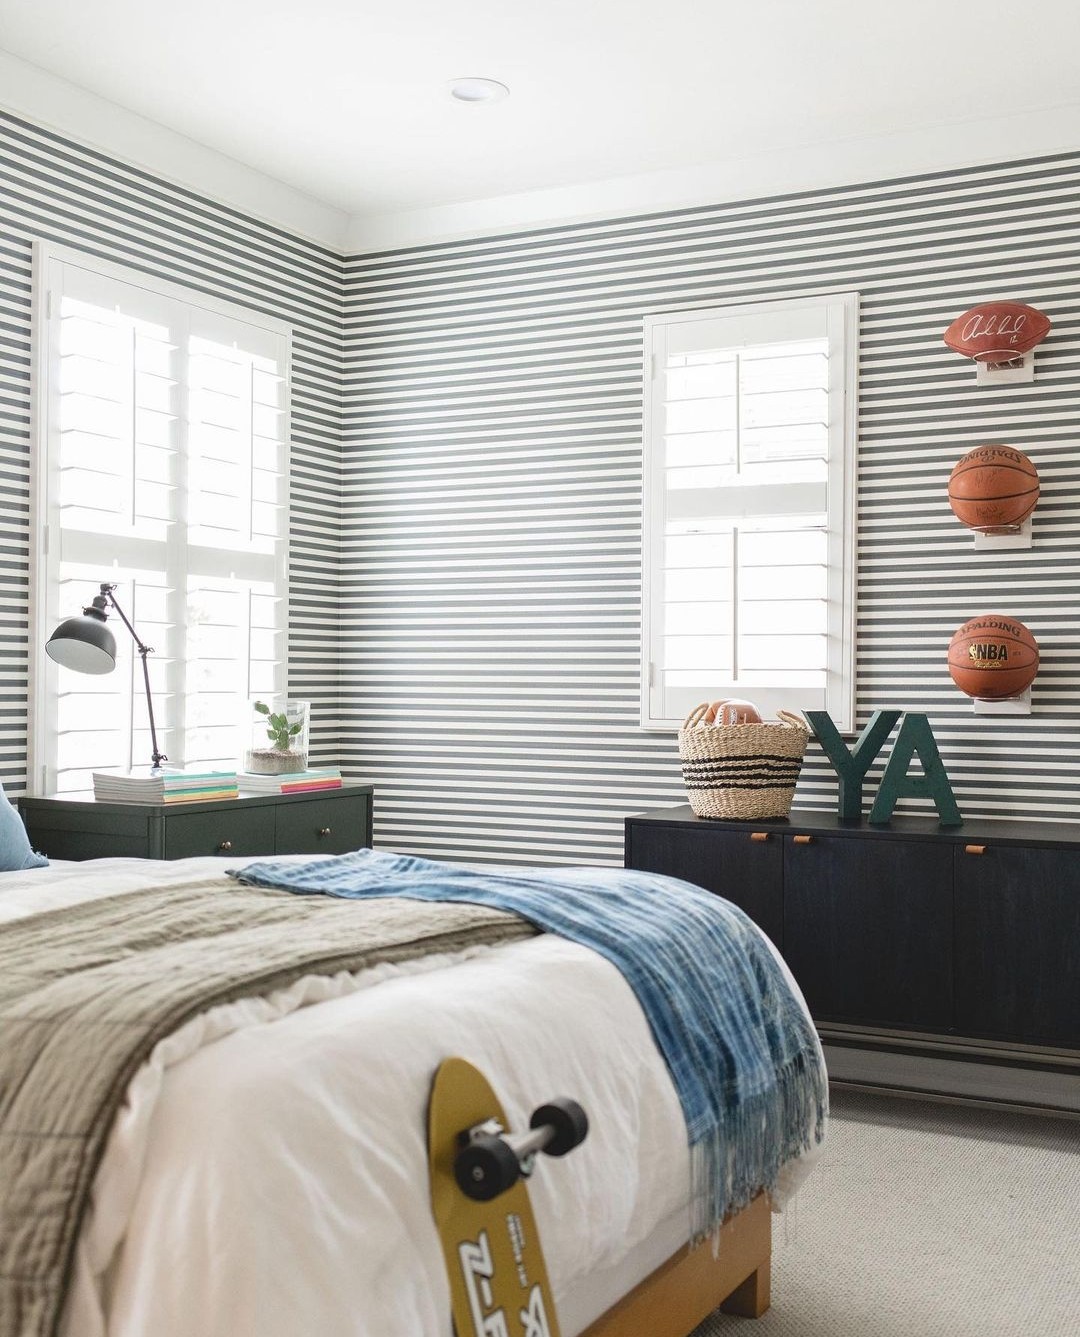 Striped wallpaper and ball shelves